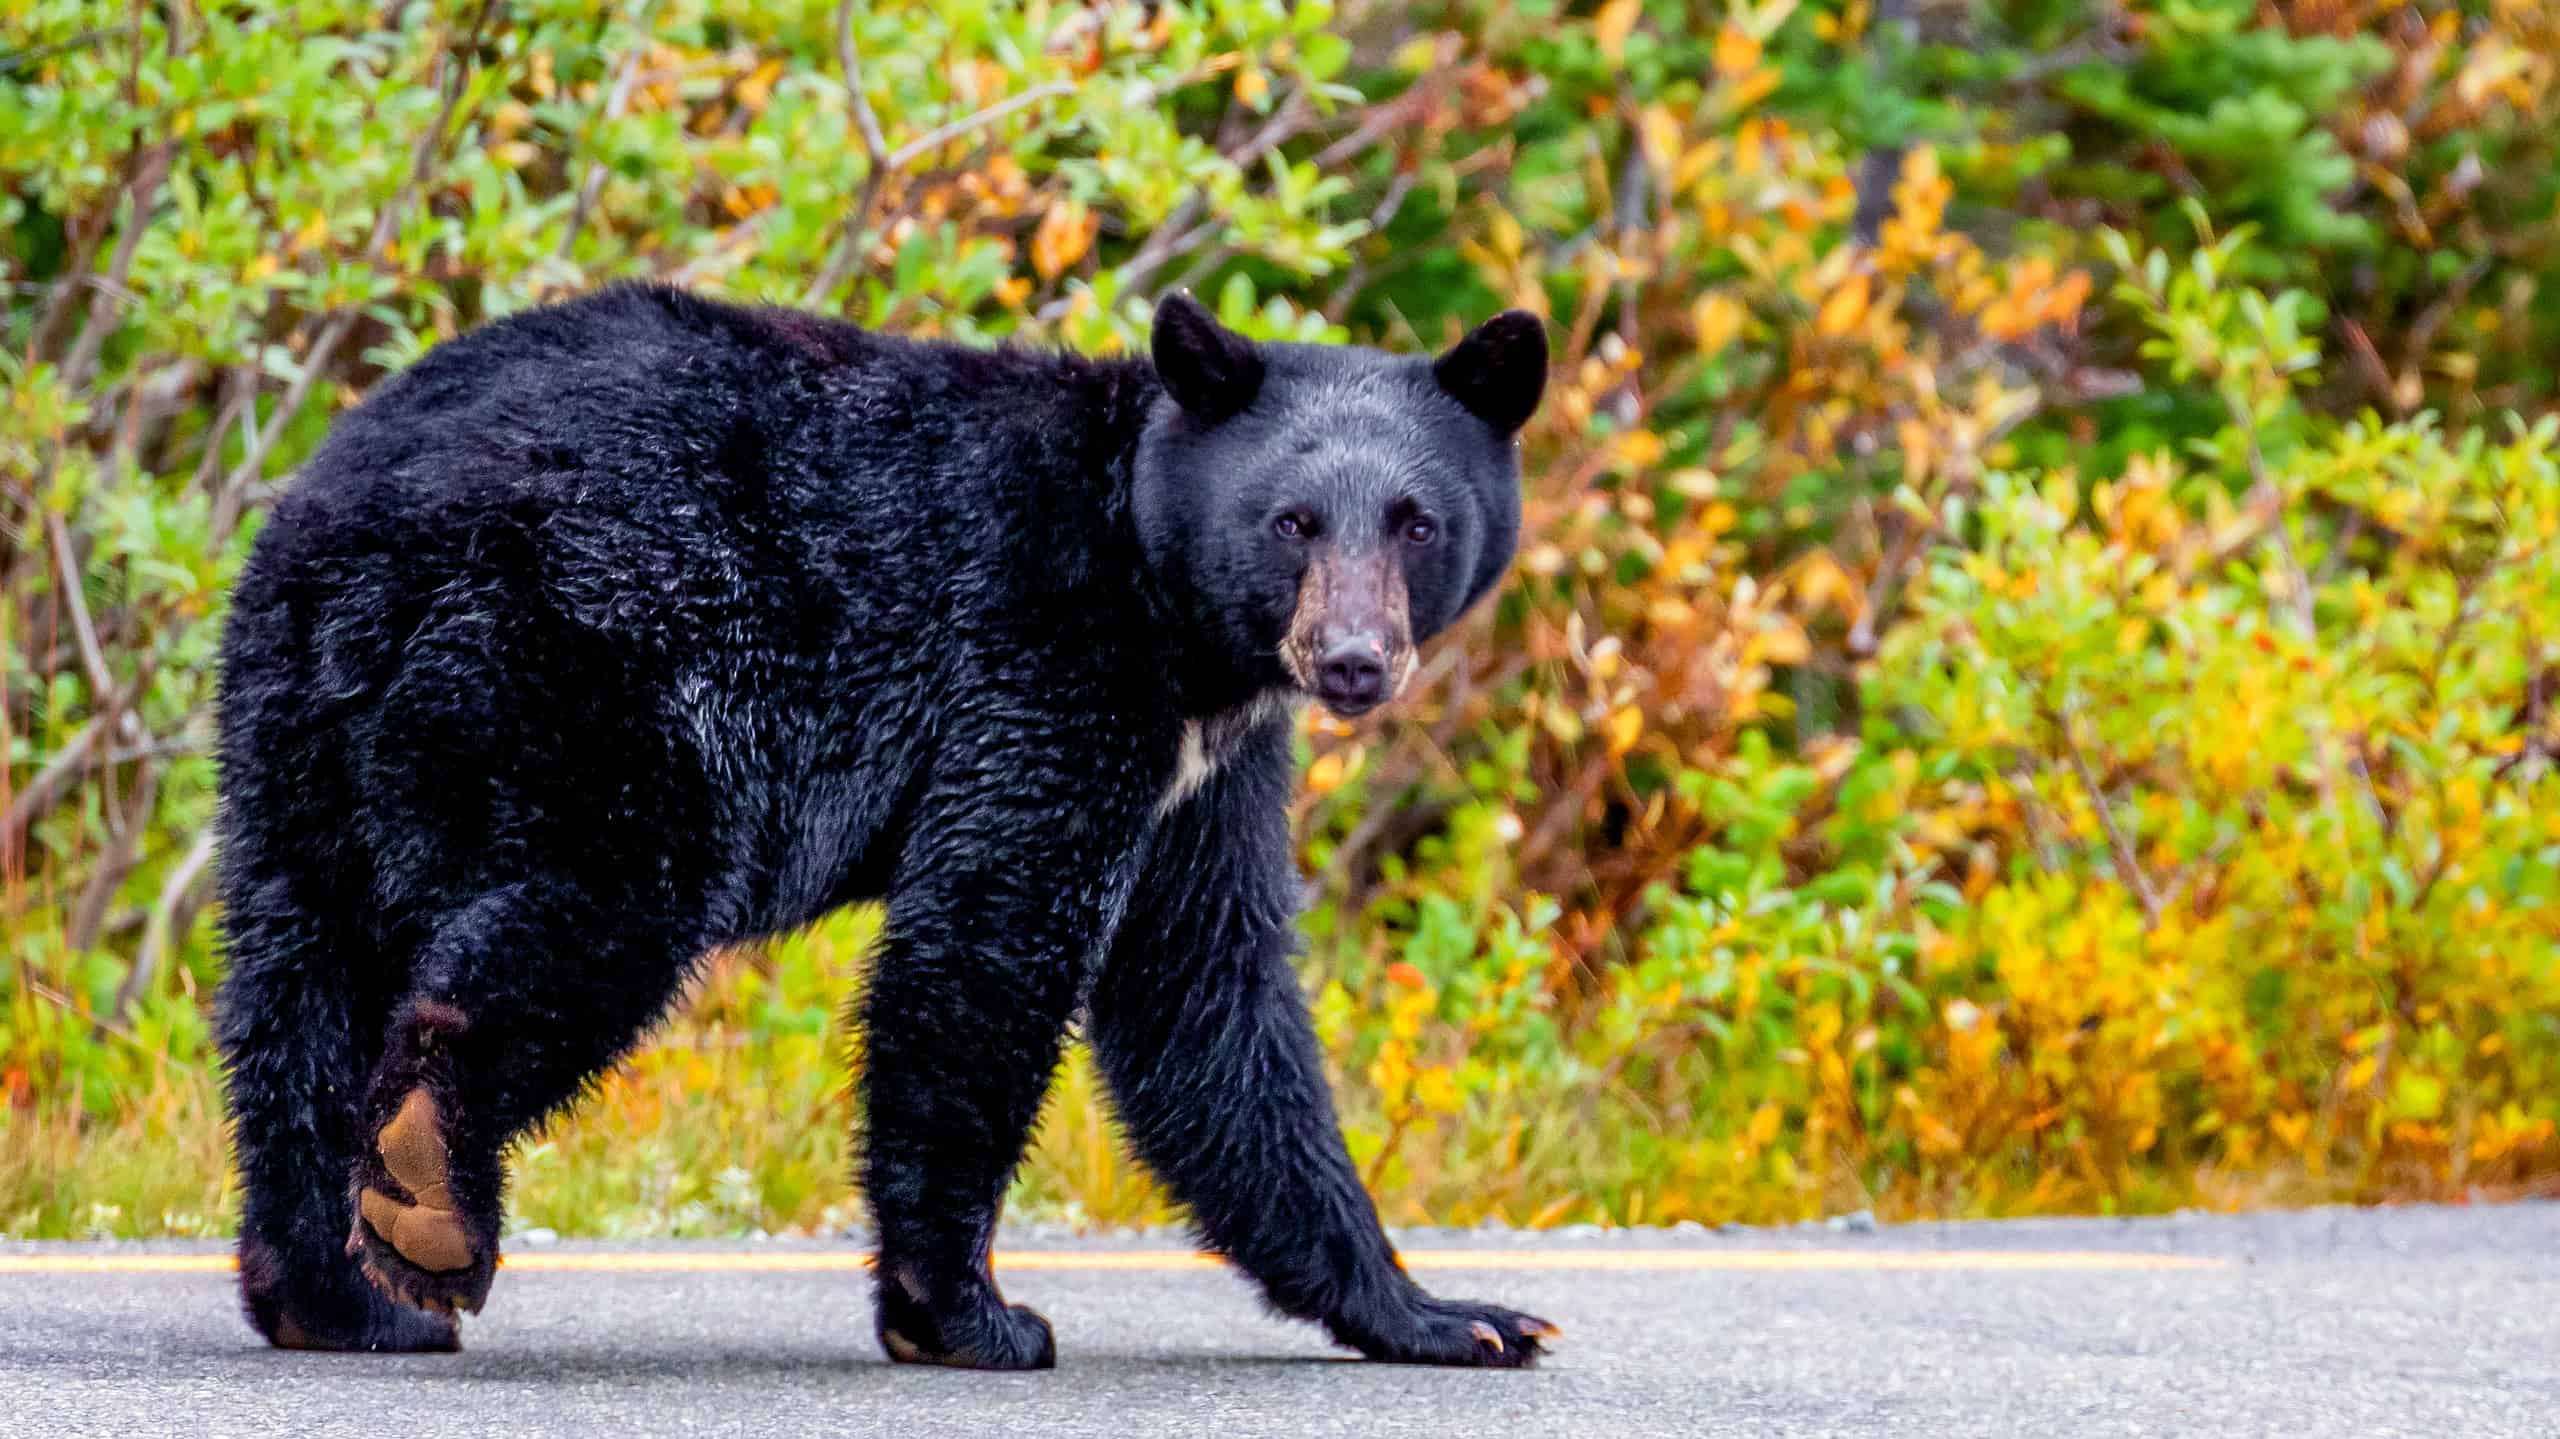 Black Bear on road Mt Rainier, Washington